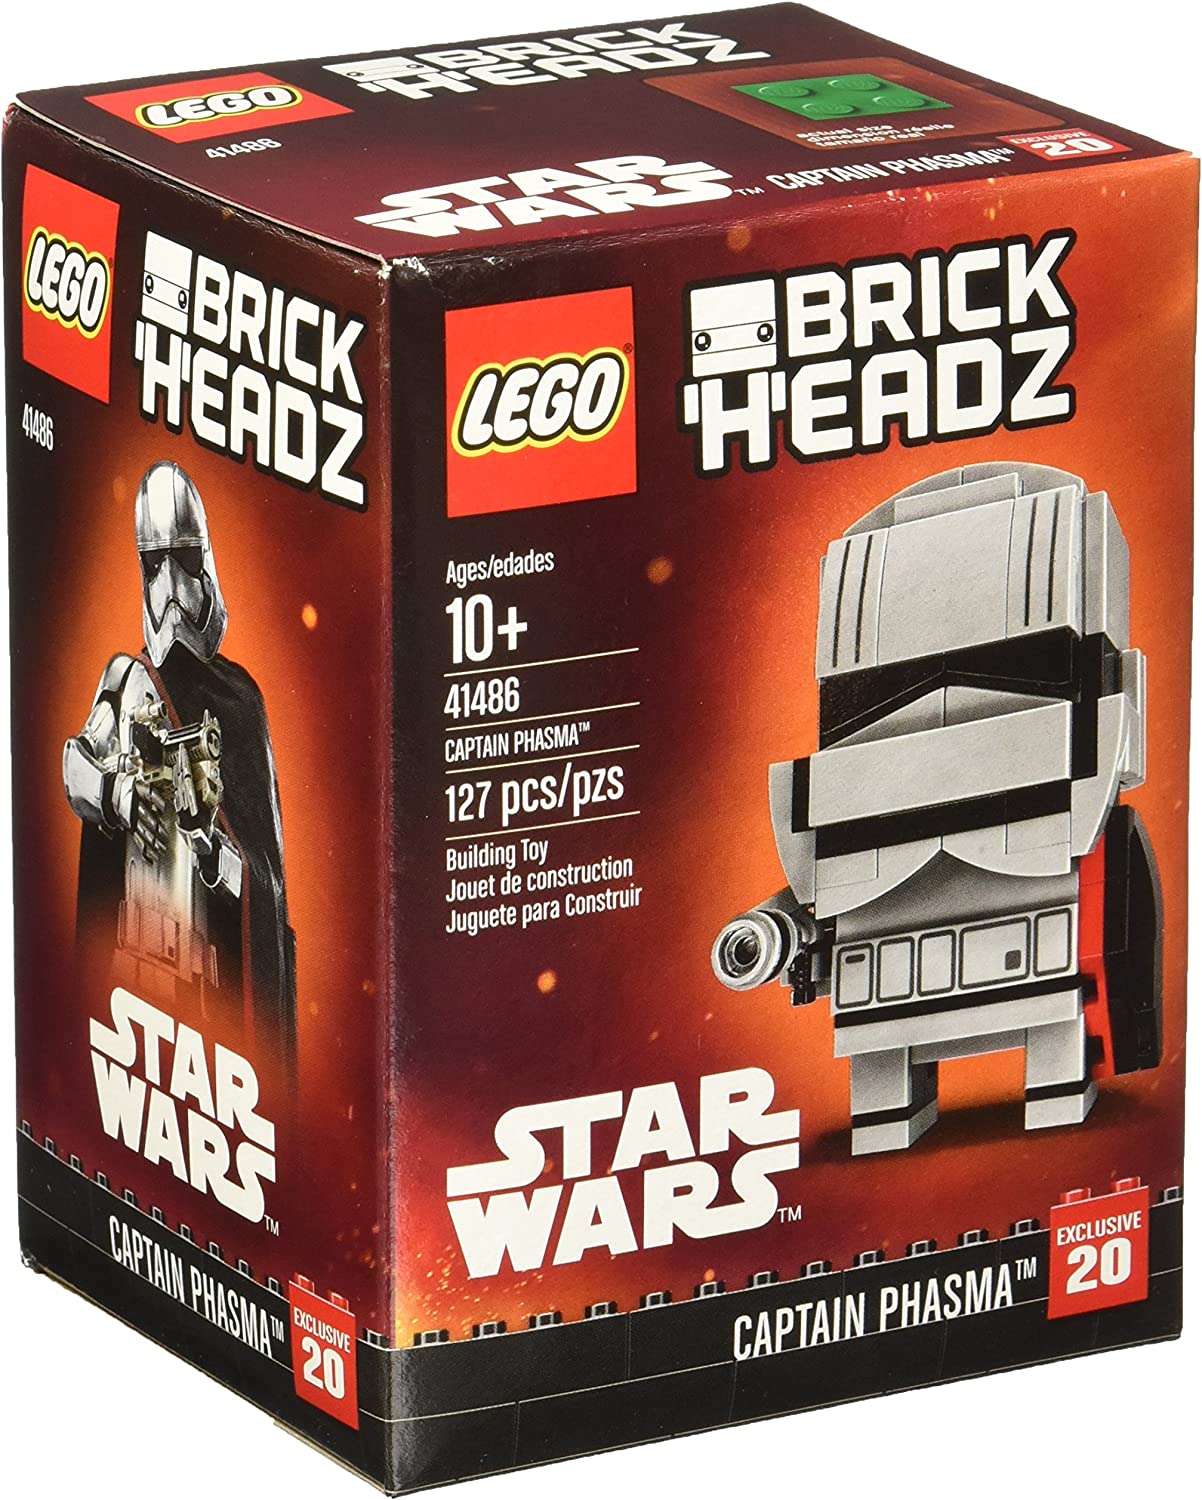 LEGO Brick Headz Star Wars Captain Phasma Set 41486